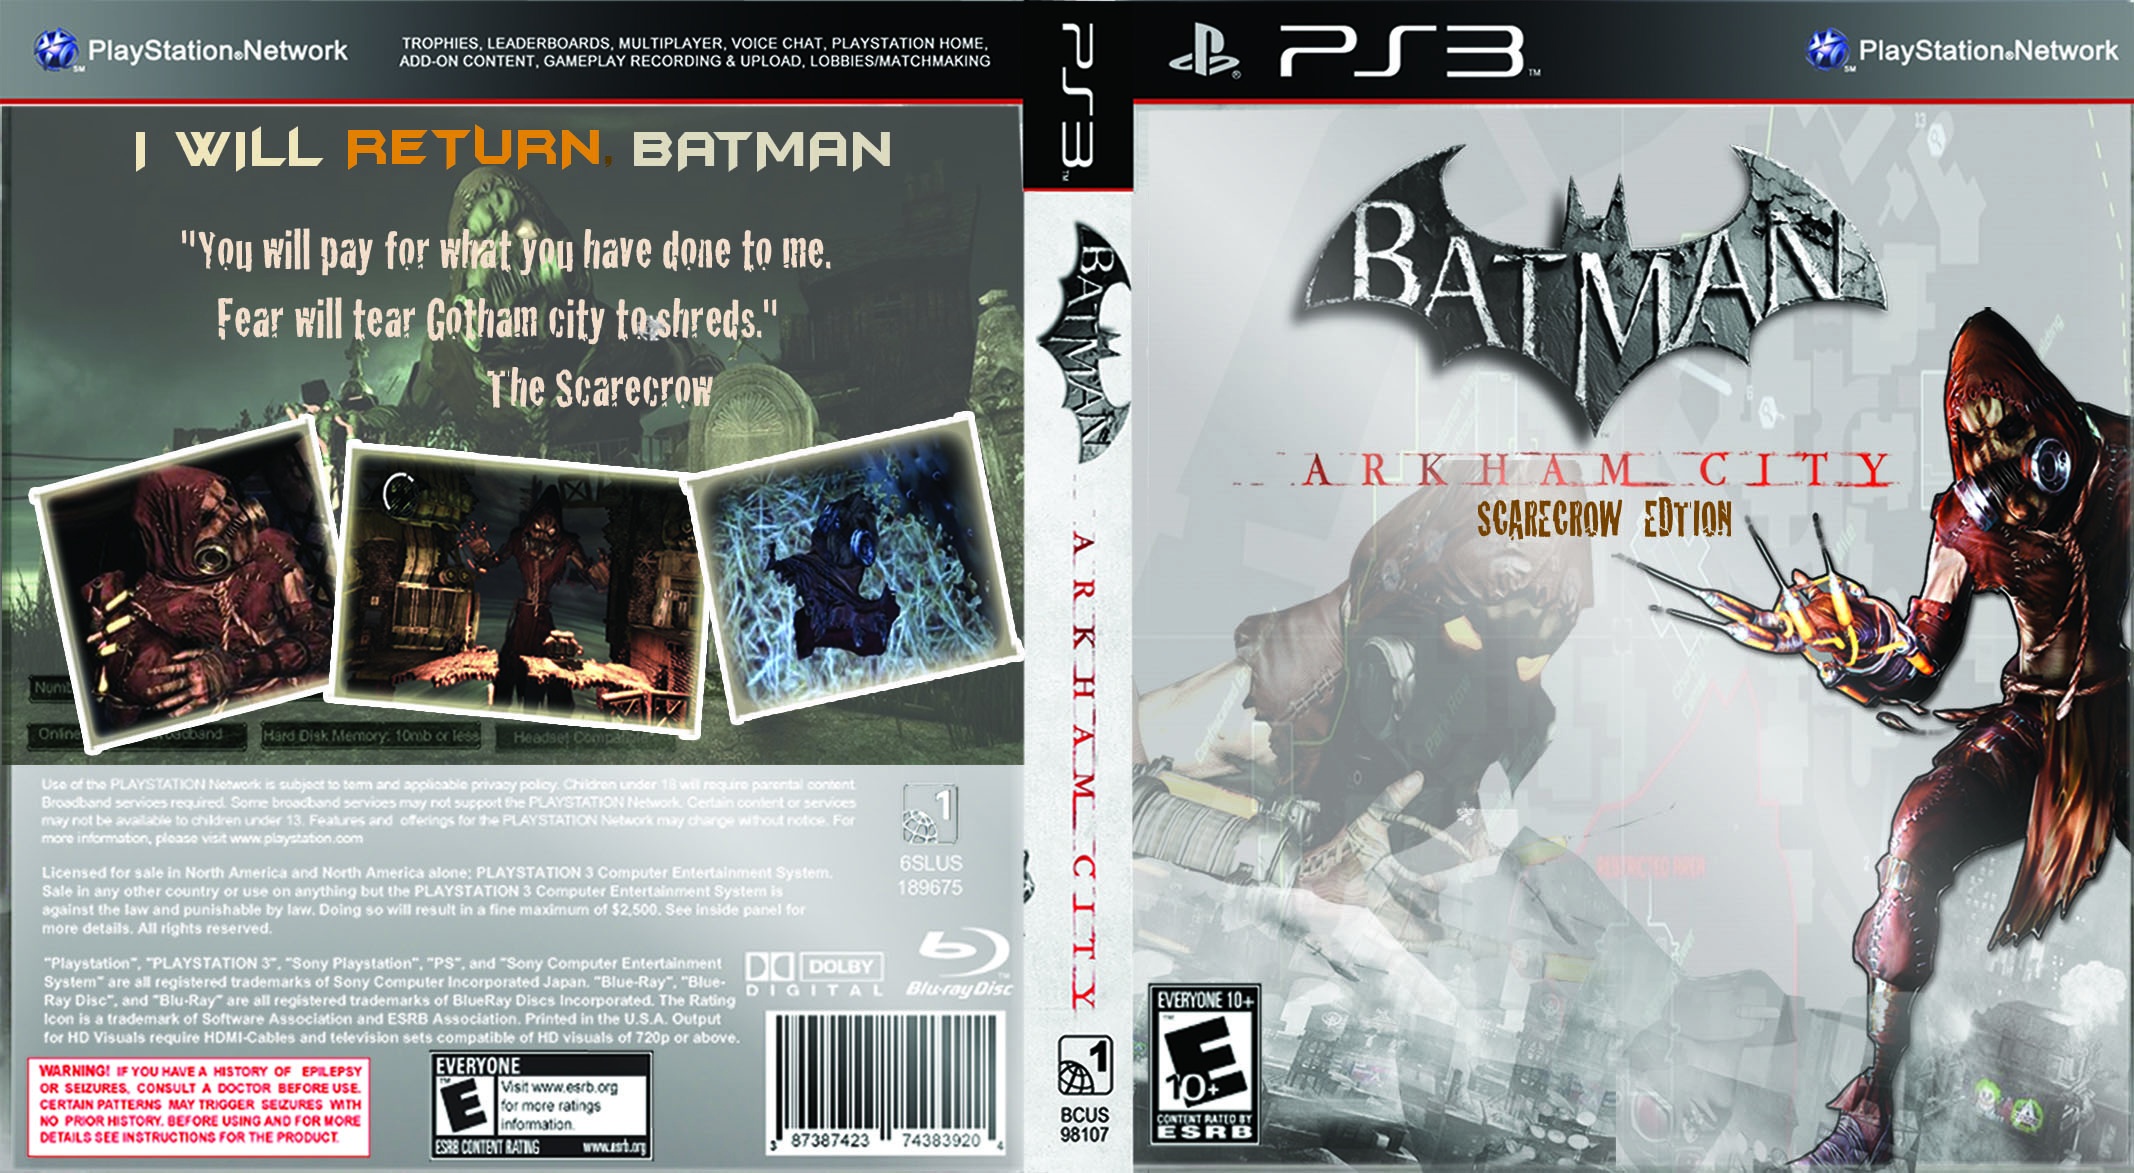 Batman Arkham City Scarecrow Edition box cover